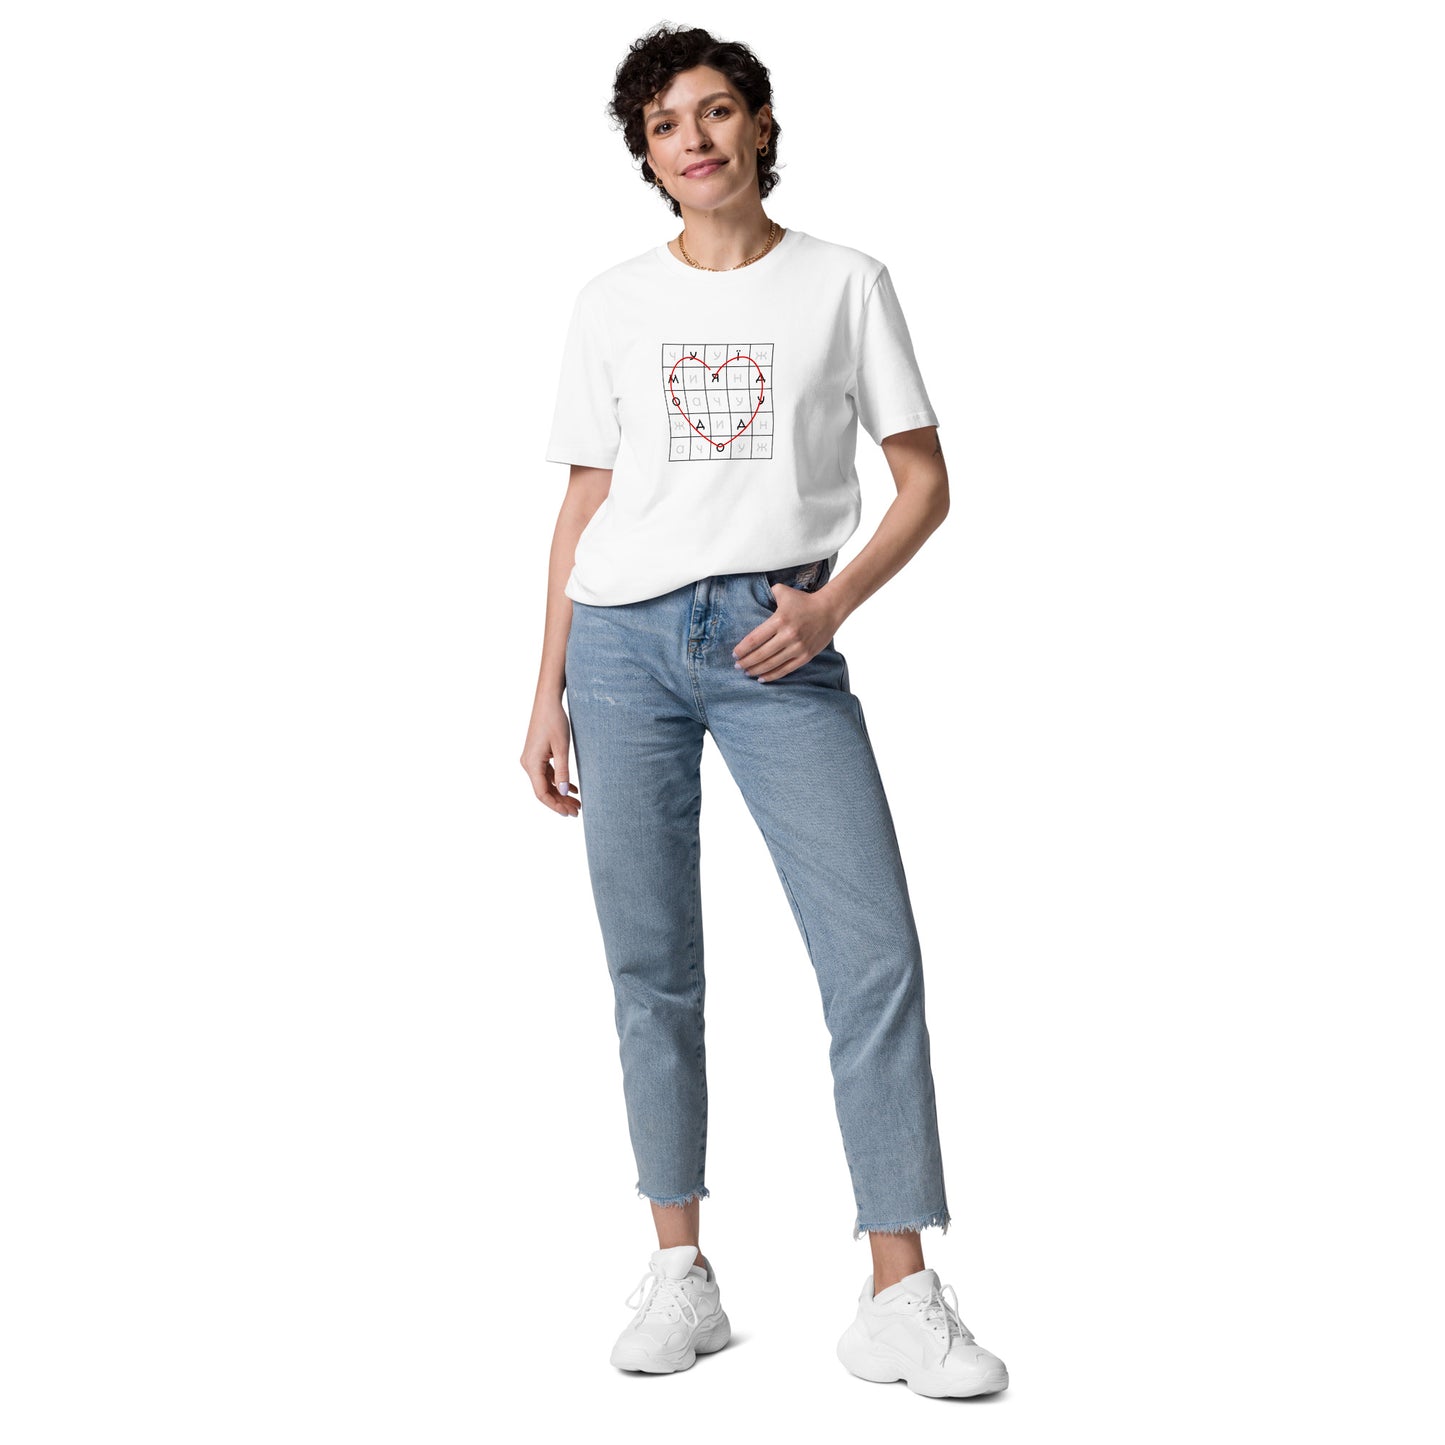 Idu dodomy unisex organic printed cotton t-shirt in white